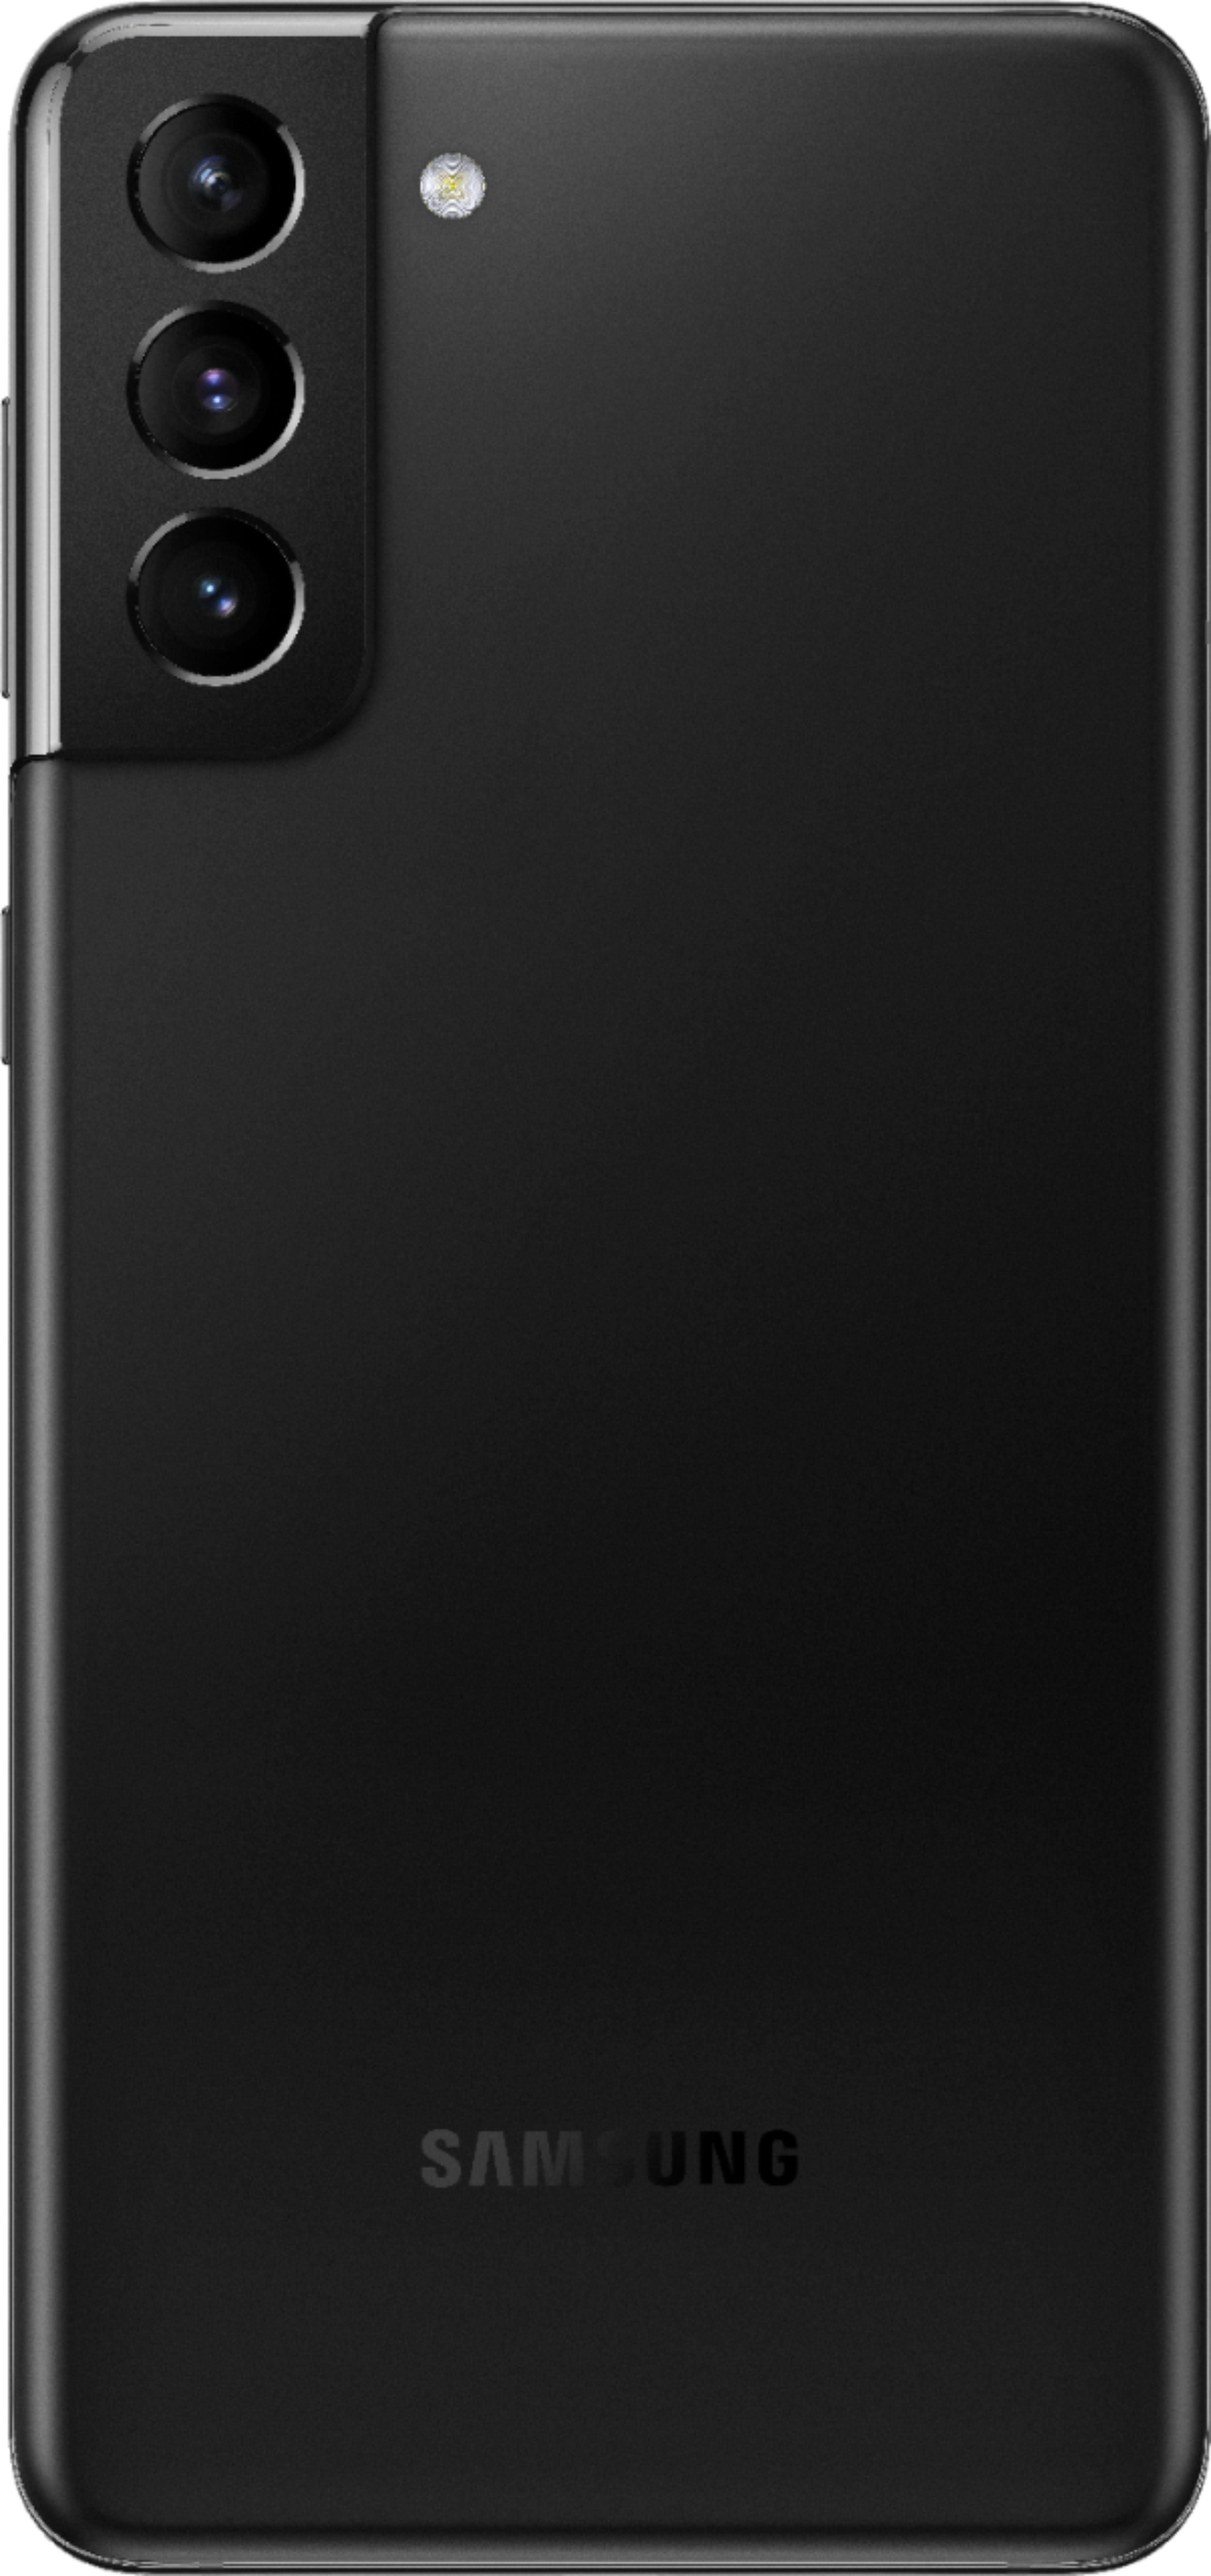 Samsung Galaxy S21+ Plus 5G SM-G996U1 128GB Black (US Model) - Factory  Unlocked Cell Phone 